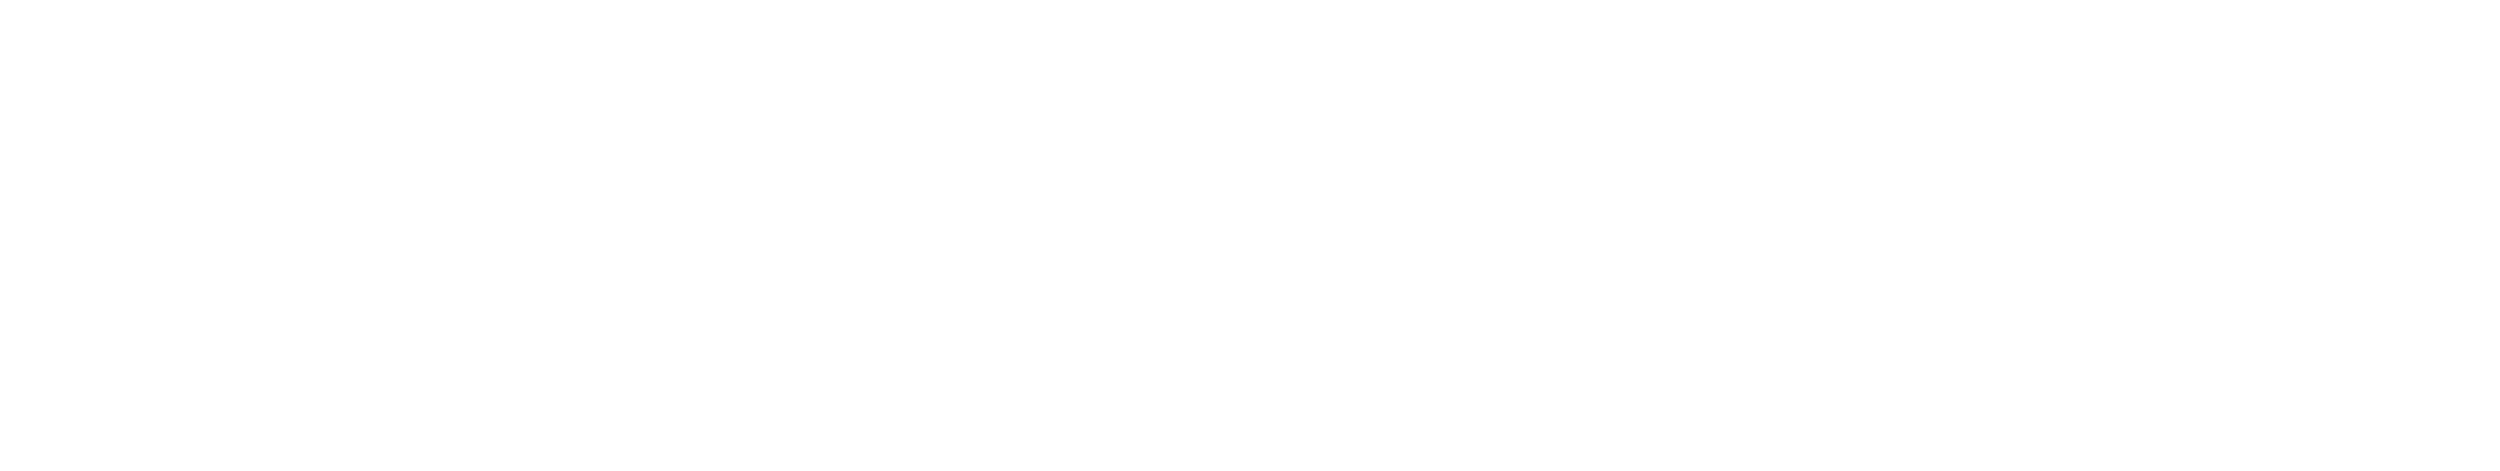 BuzzFeed Inc.